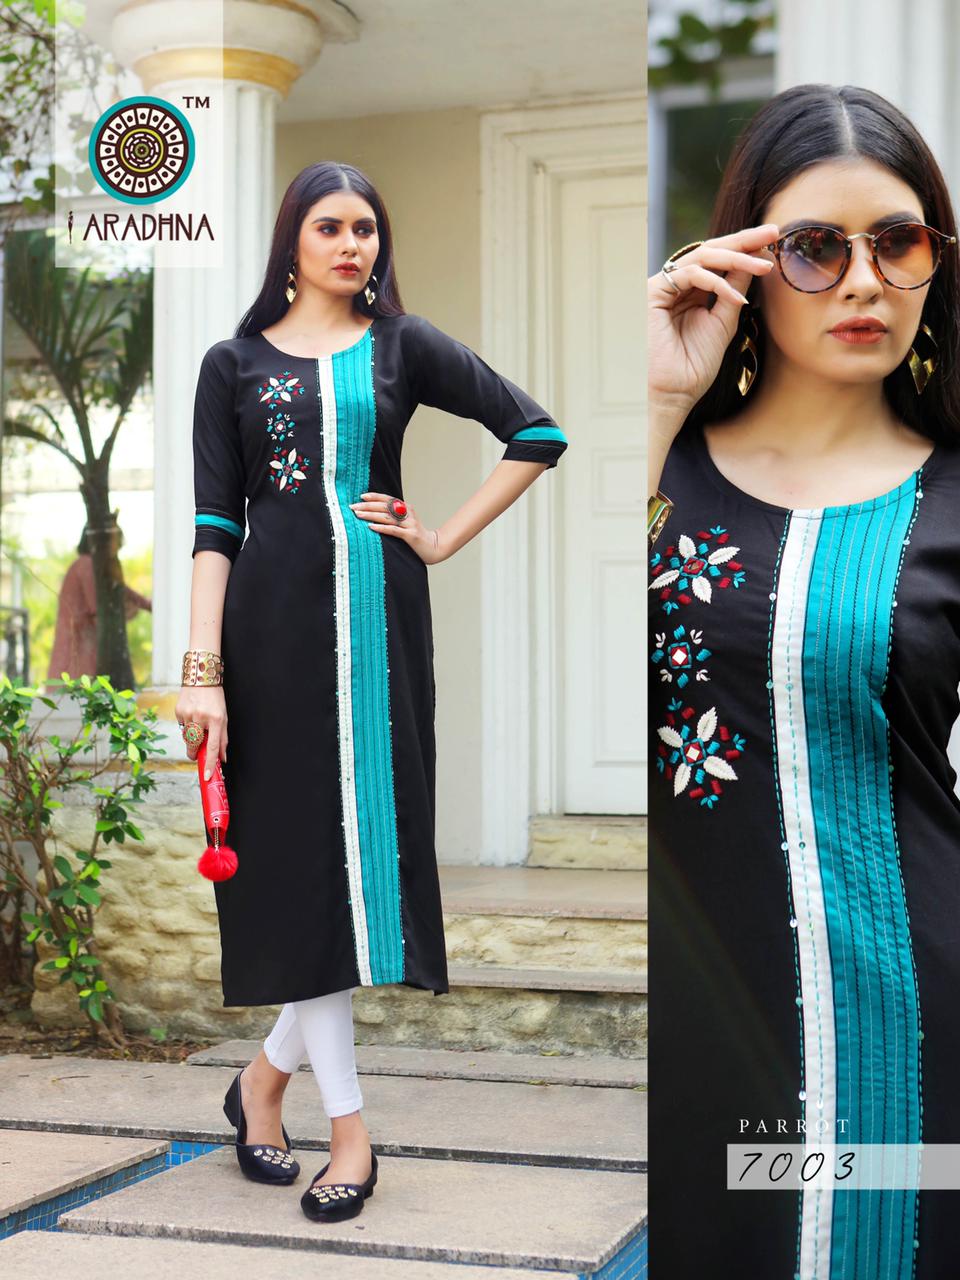 Aradhana Fashion Presents Parrot Vol-7 Rayon Embroidery Work Fancy Daily Wear Kurtis Cataloge